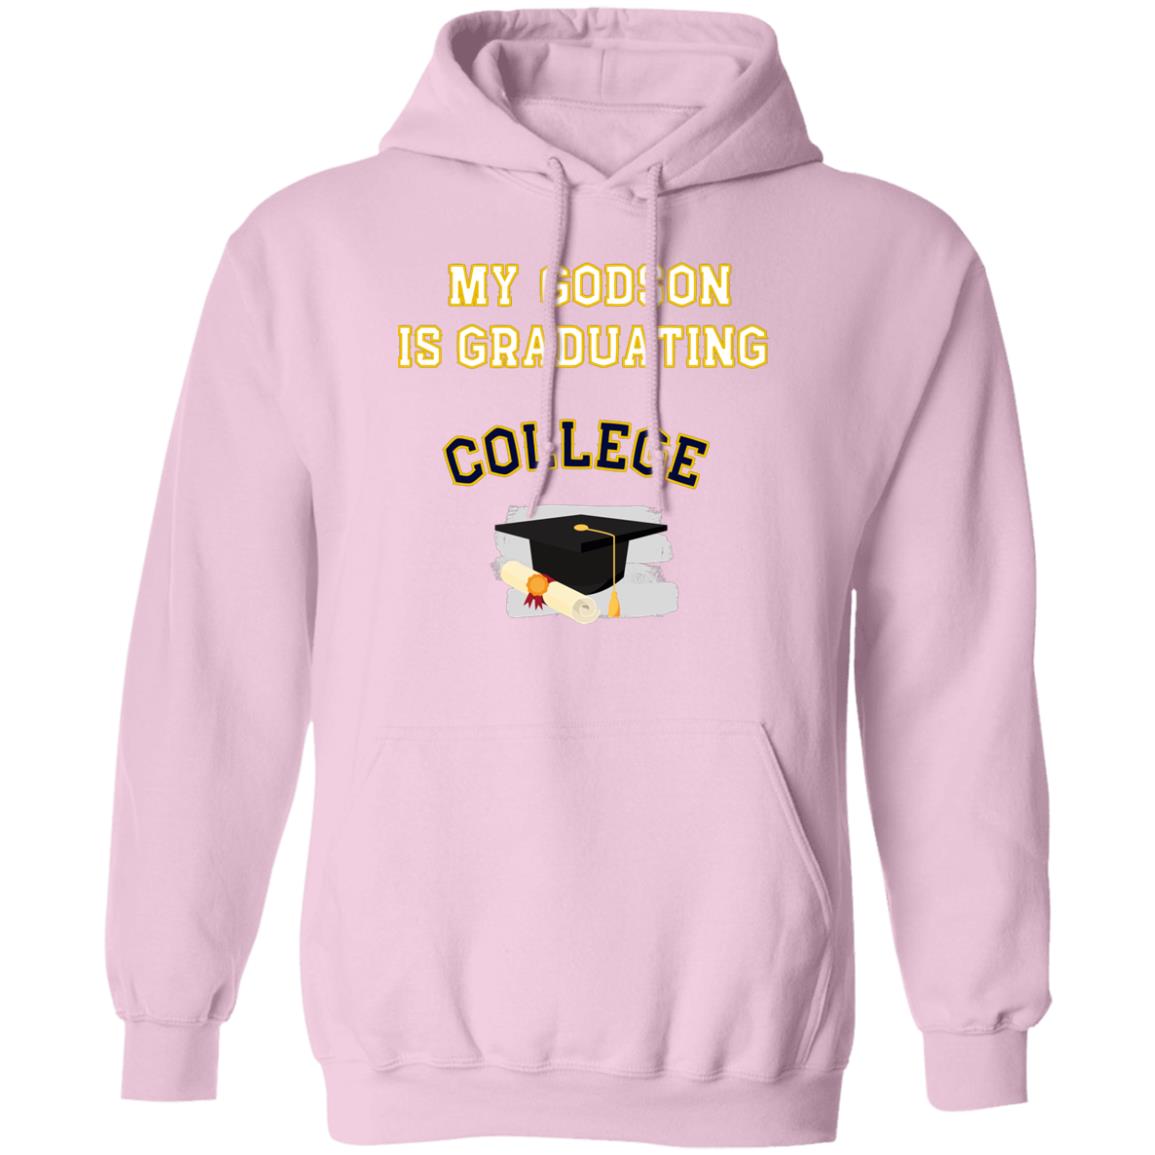 Goddson Graduating College Hoodie